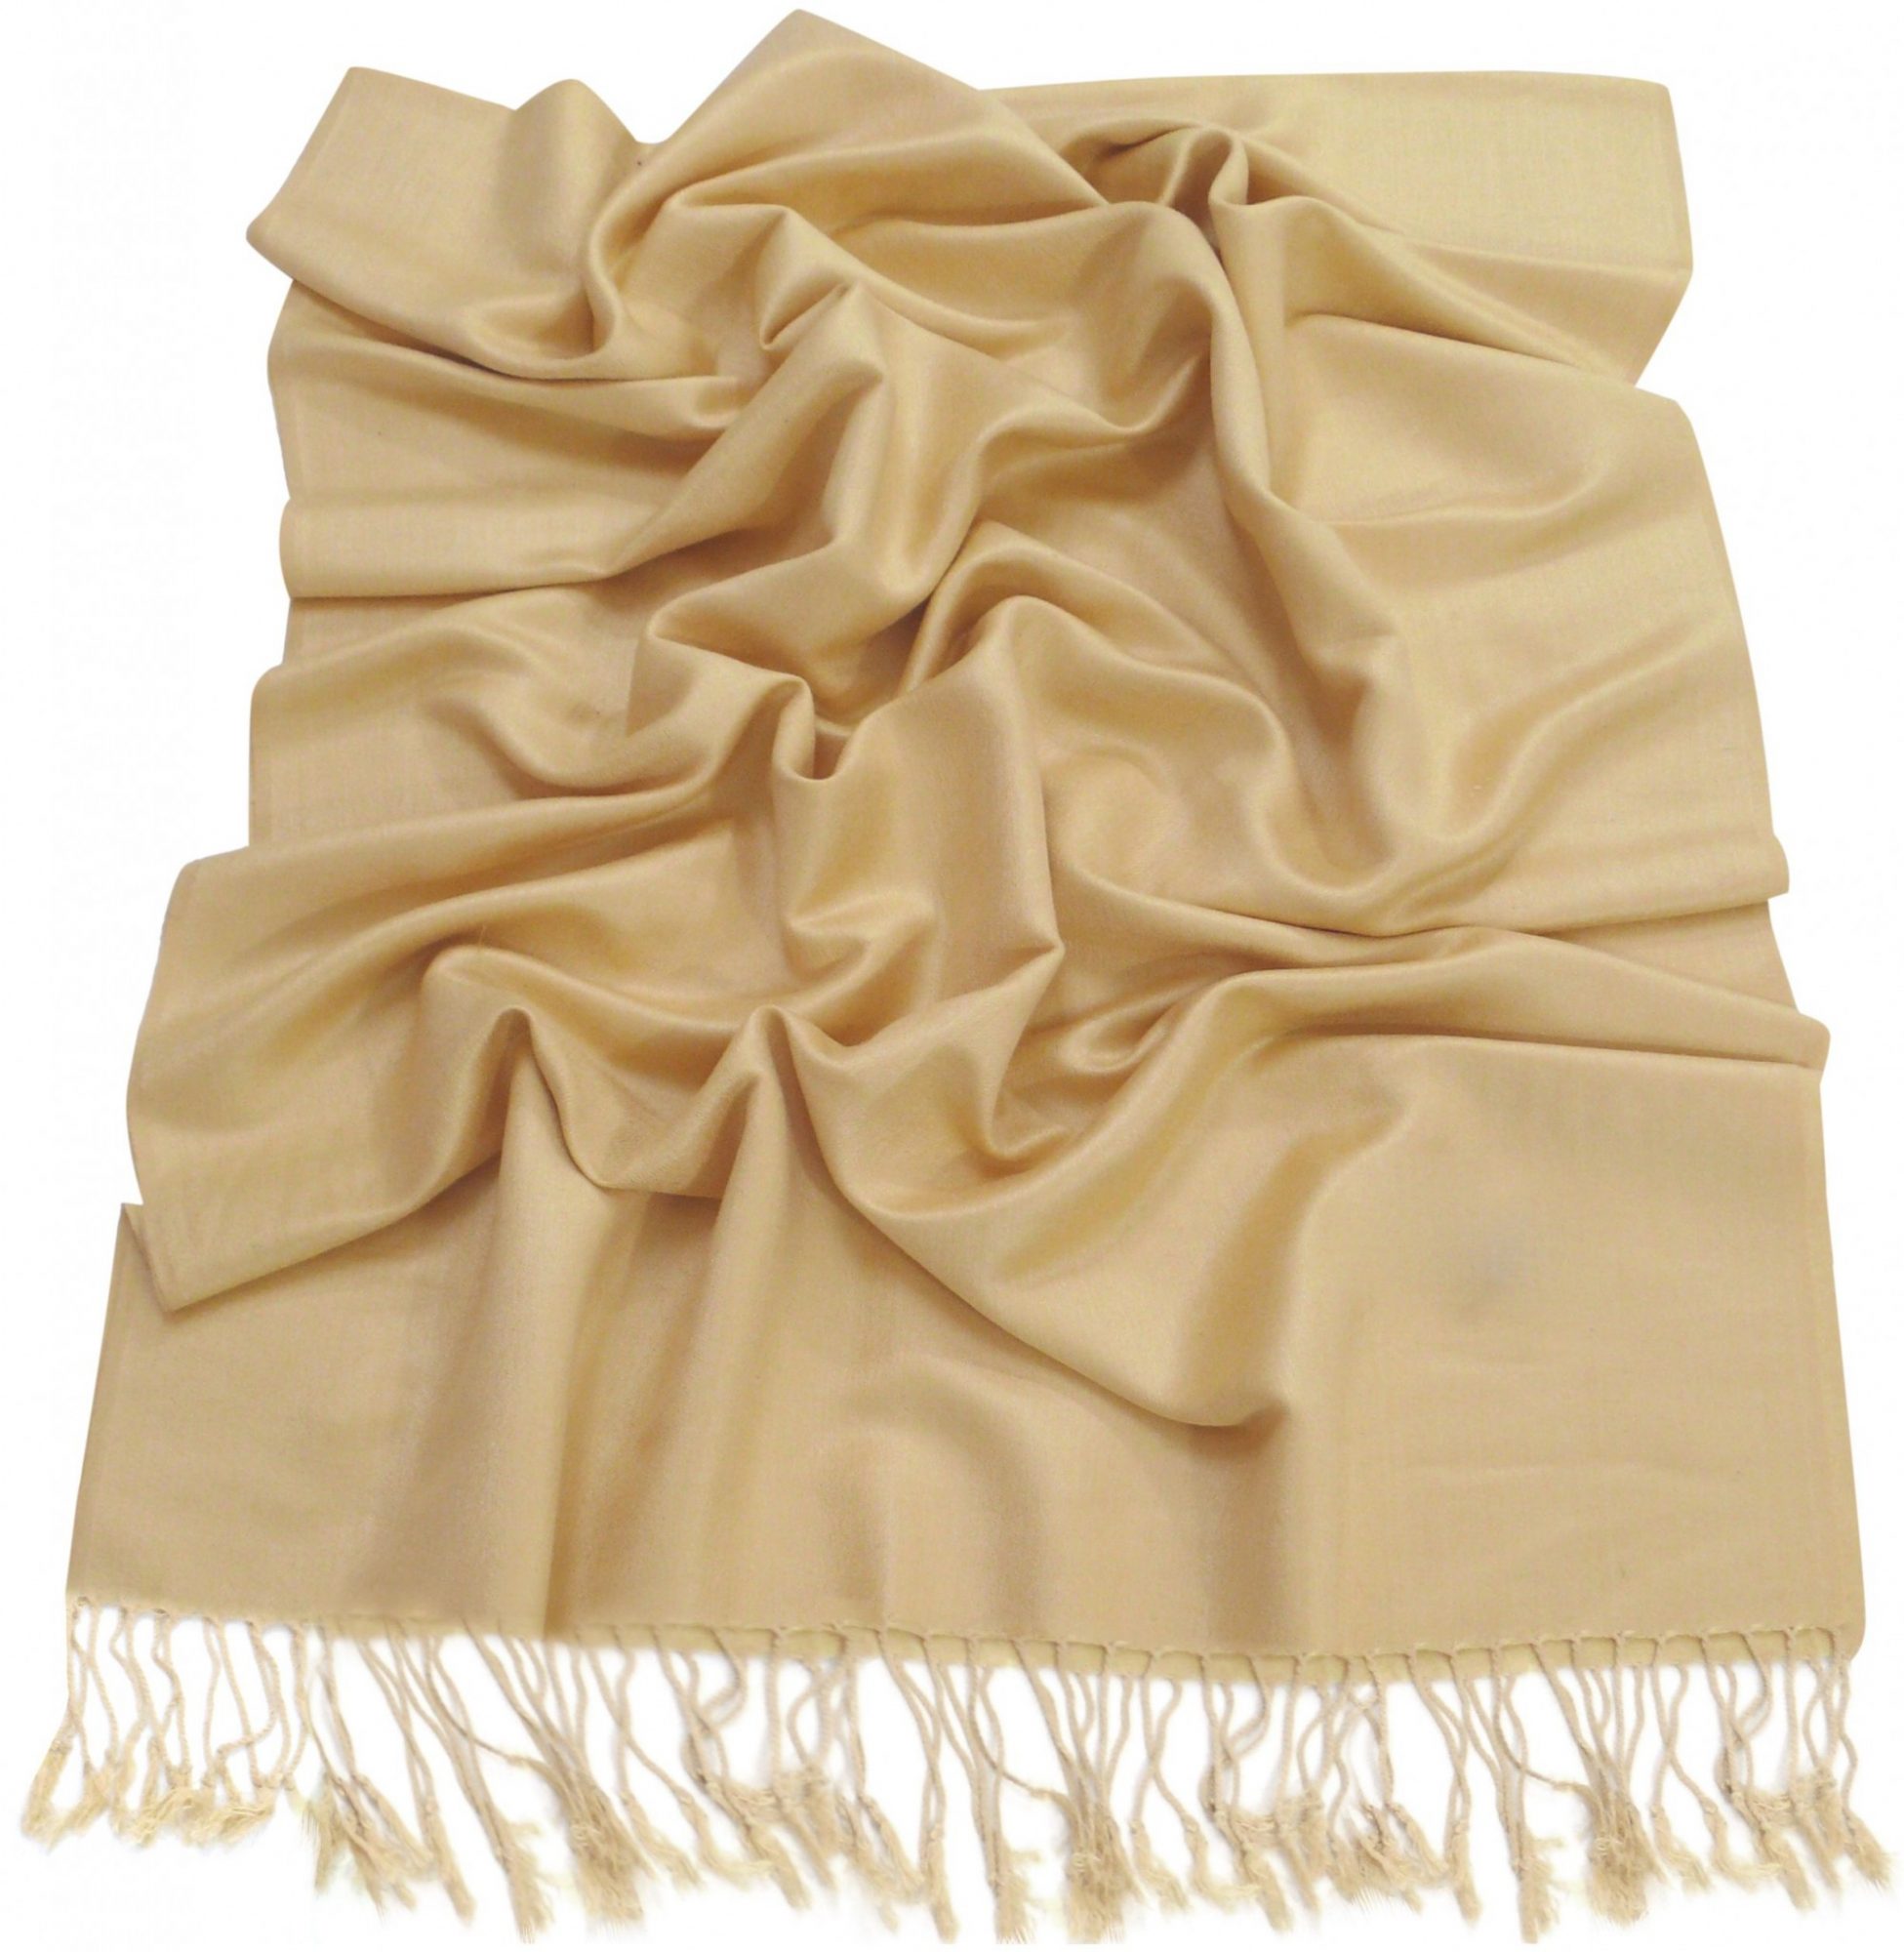 Rich Cream Solid Color Design Pashmina Shawl Scarf Wrap Pashminas Shawls Scarves Wraps NEW a1108-404